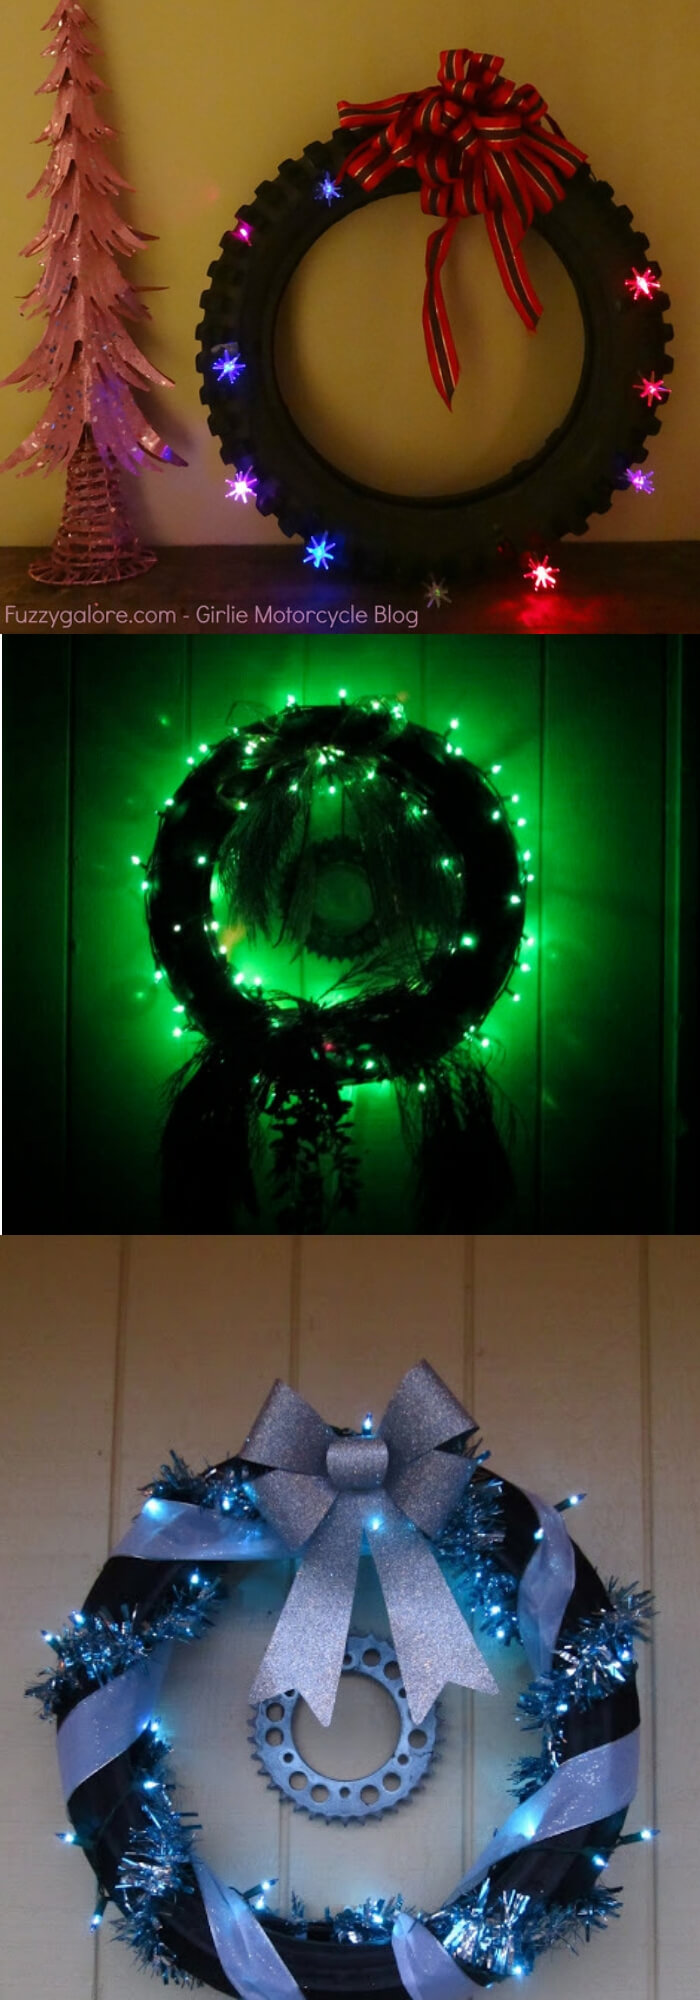 Knobby Tire Christmas wreath | Best Recycled Tire Christmas Decoration Ideas | FarmFoodFamily.com